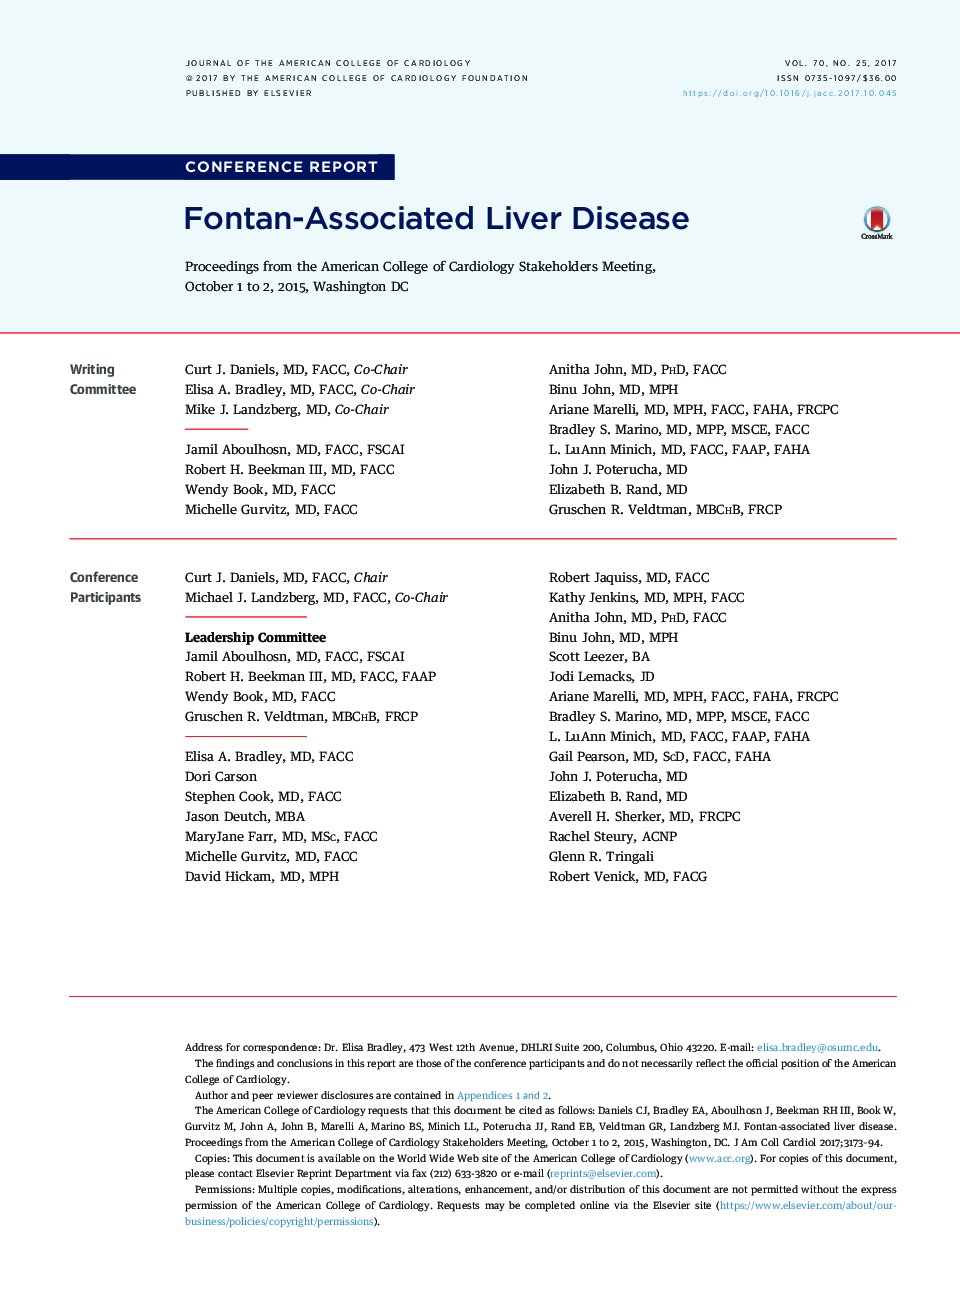 Fontan-Associated Liver Disease